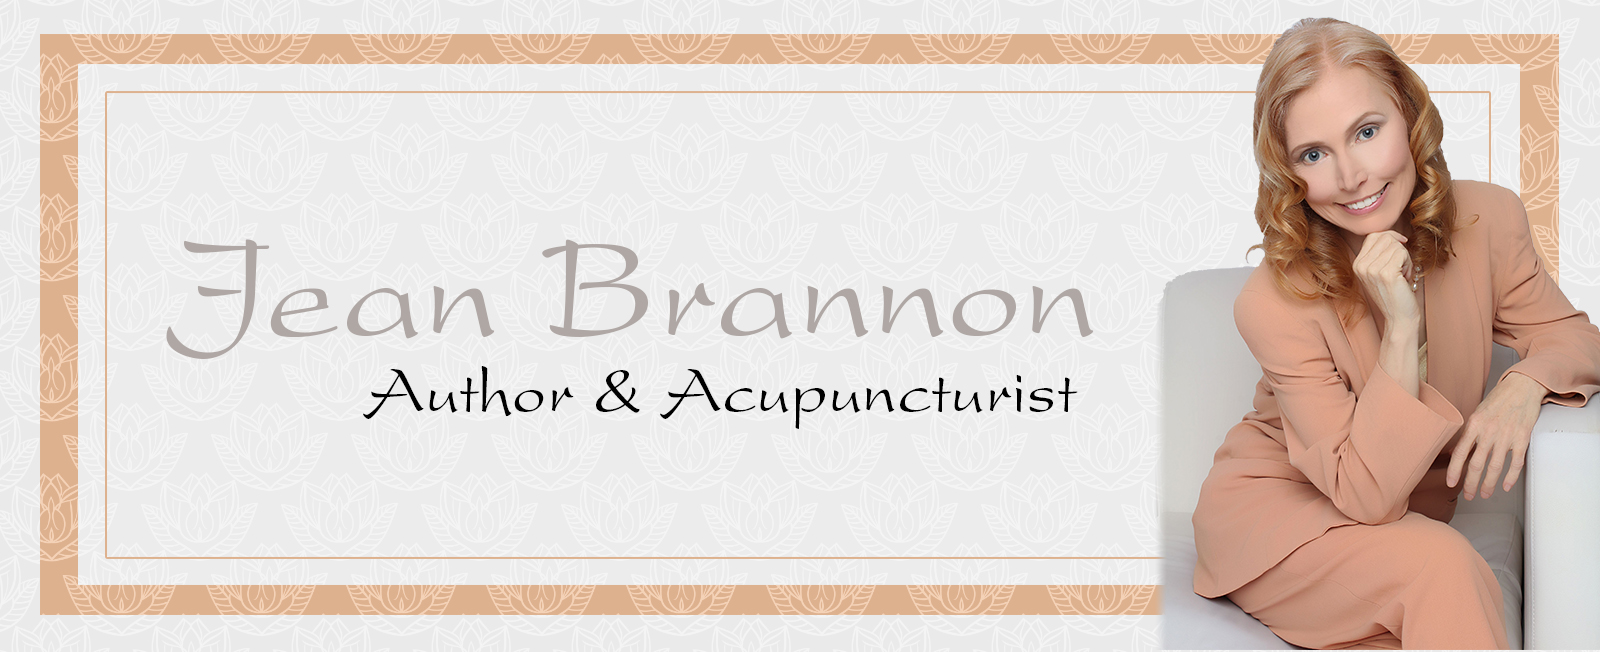 Jean Brannon The Author and Licensed Acupuncturist